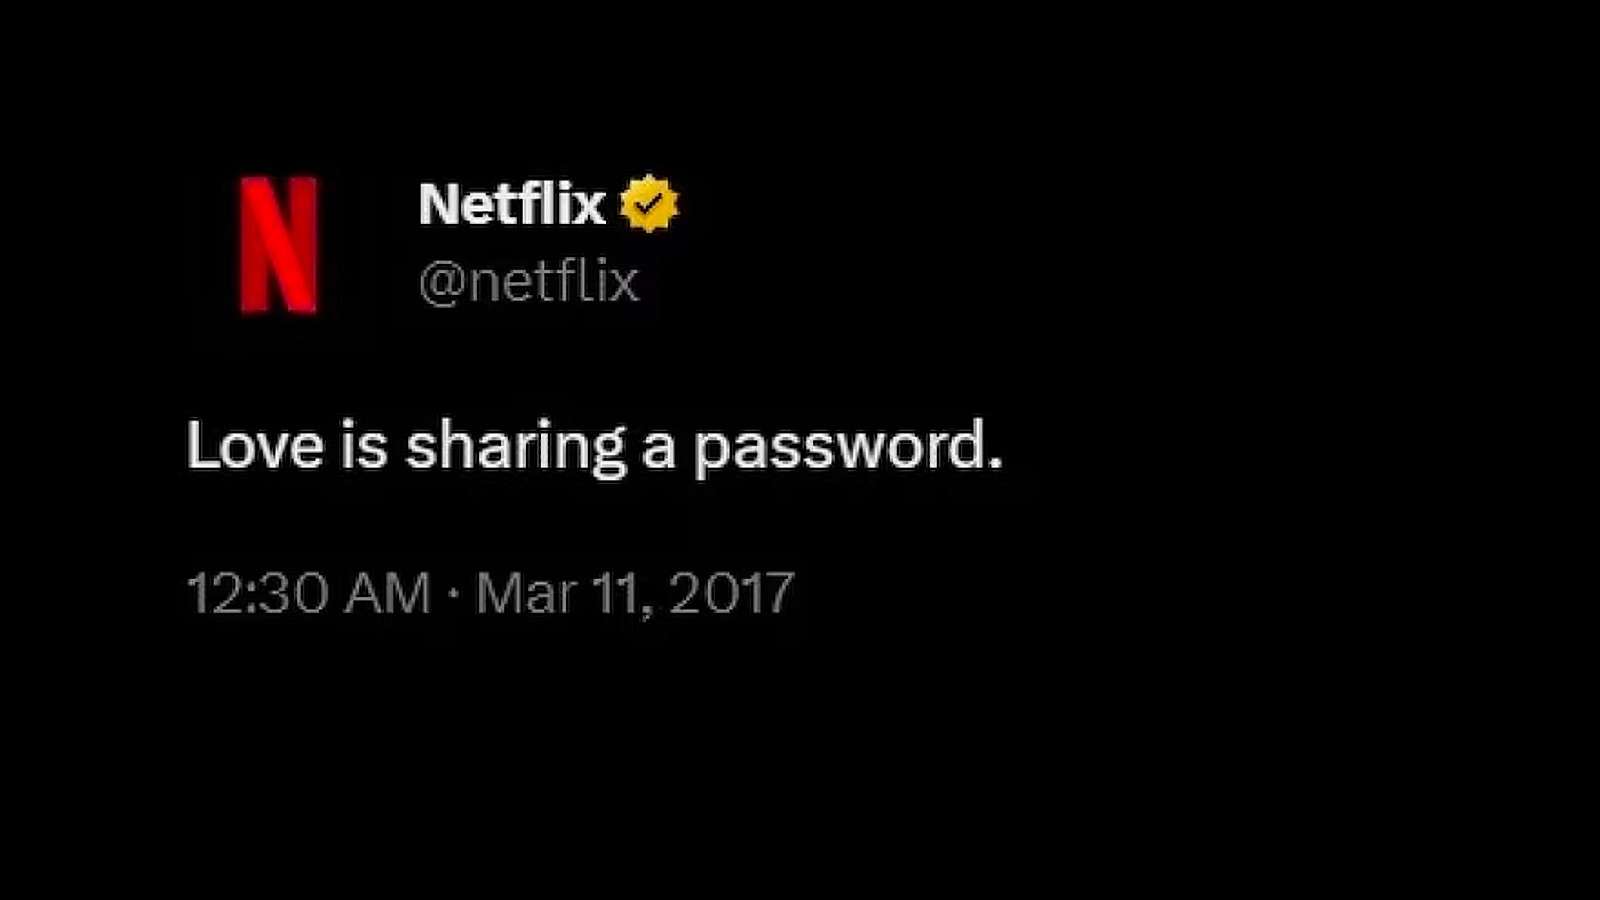 Netflix's old tweet about sharing passwords